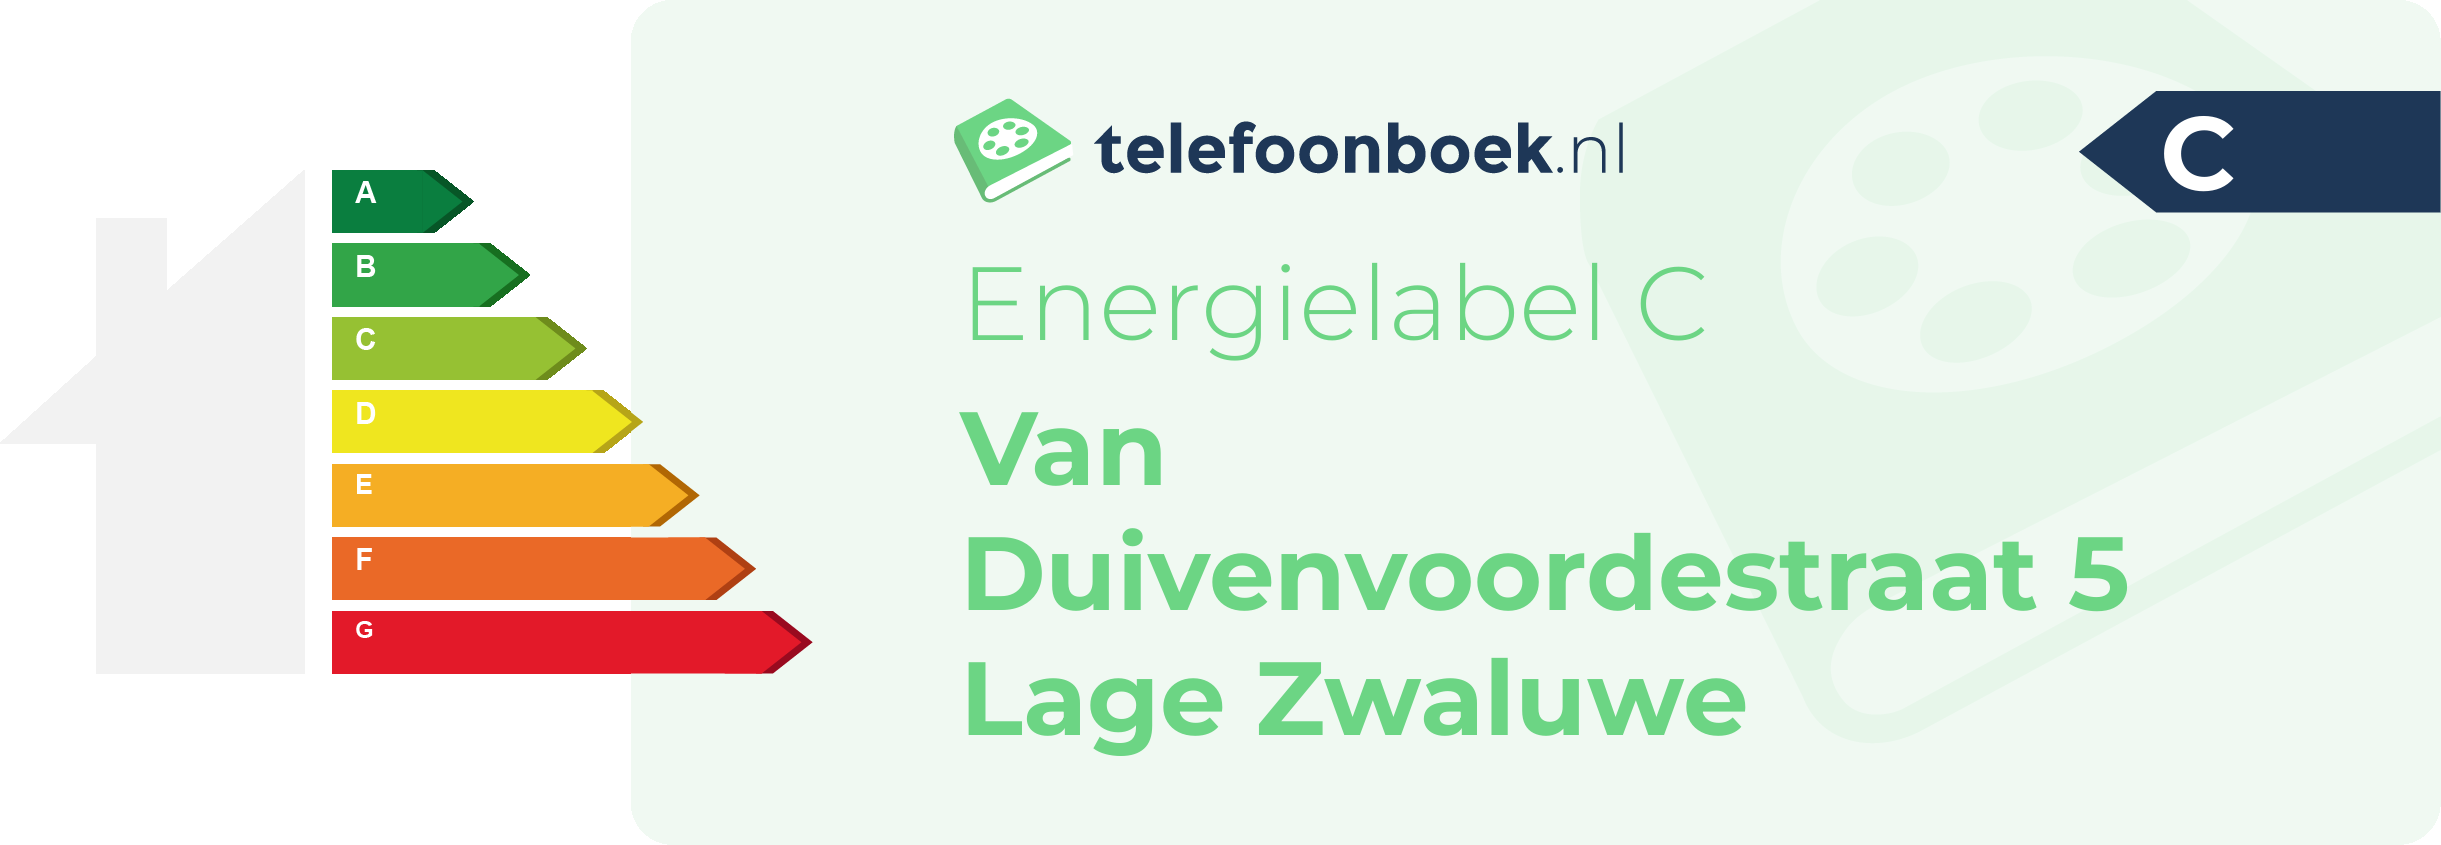 Energielabel Van Duivenvoordestraat 5 Lage Zwaluwe